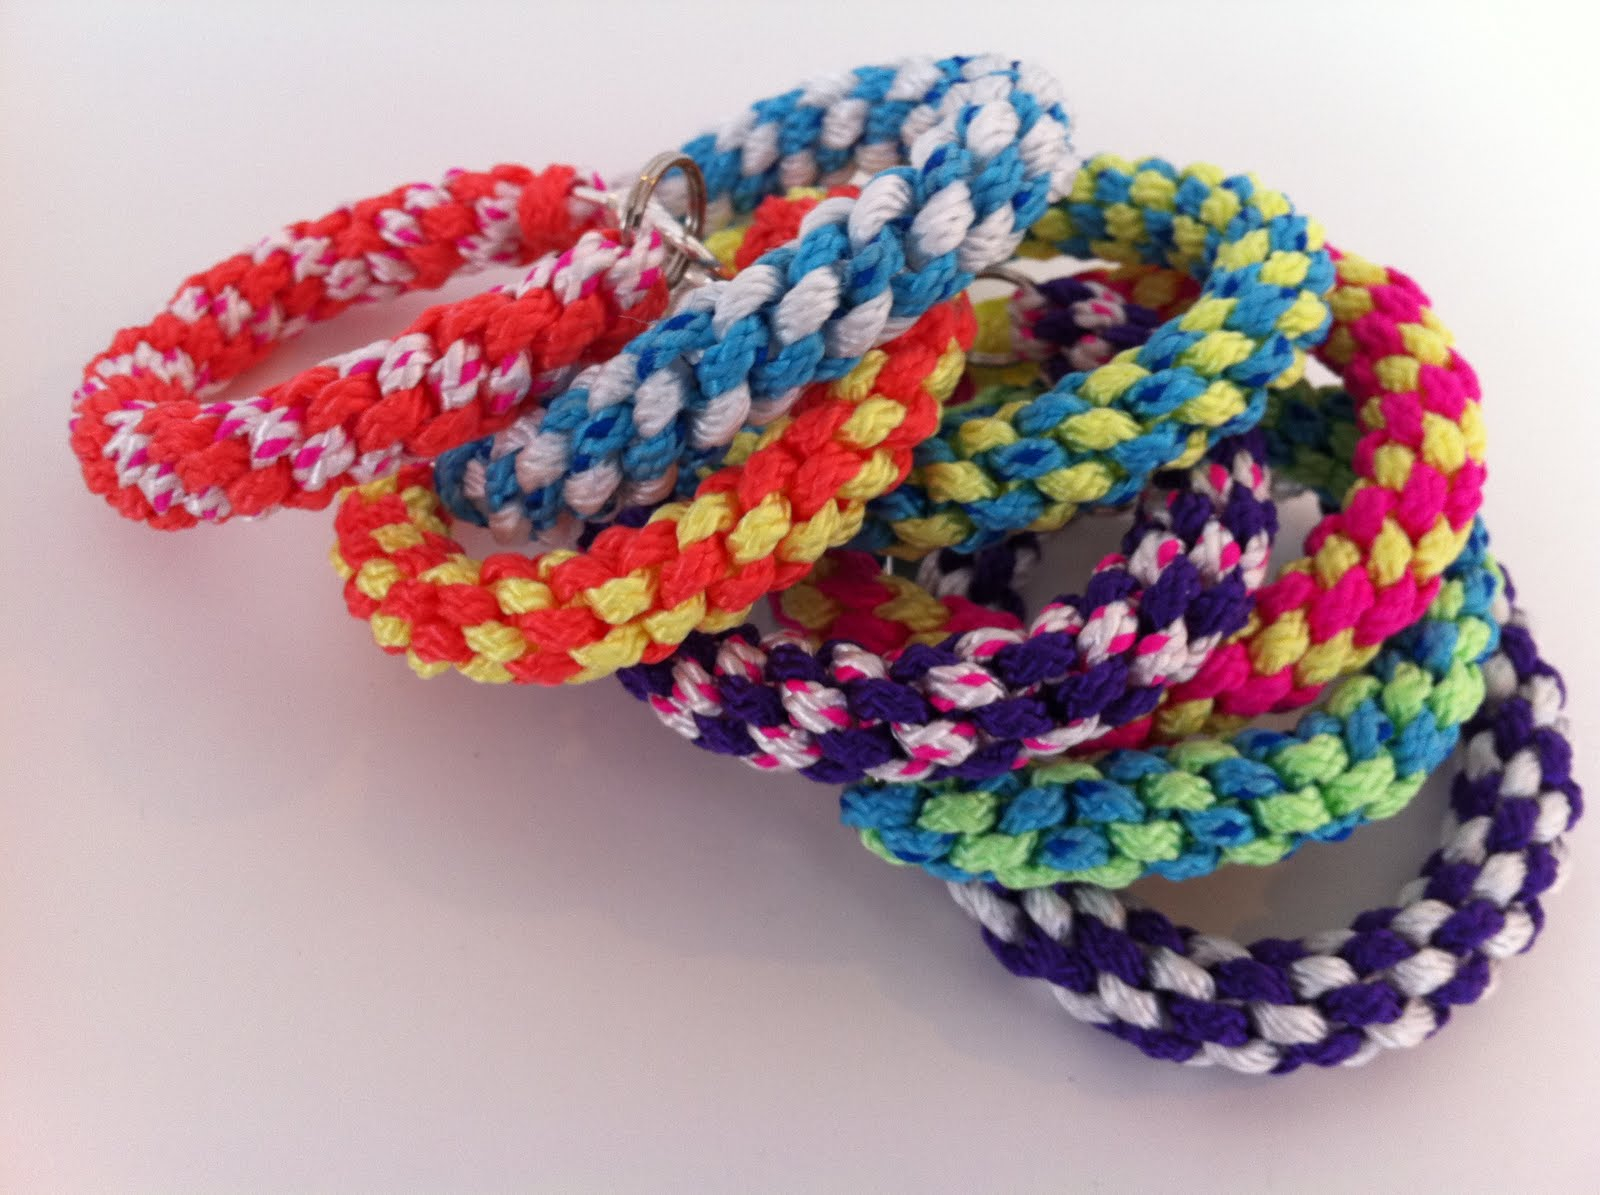 Lanyard Crochet Pattern Inspiration And Realisation Diy Fashion Blog Arm Candies